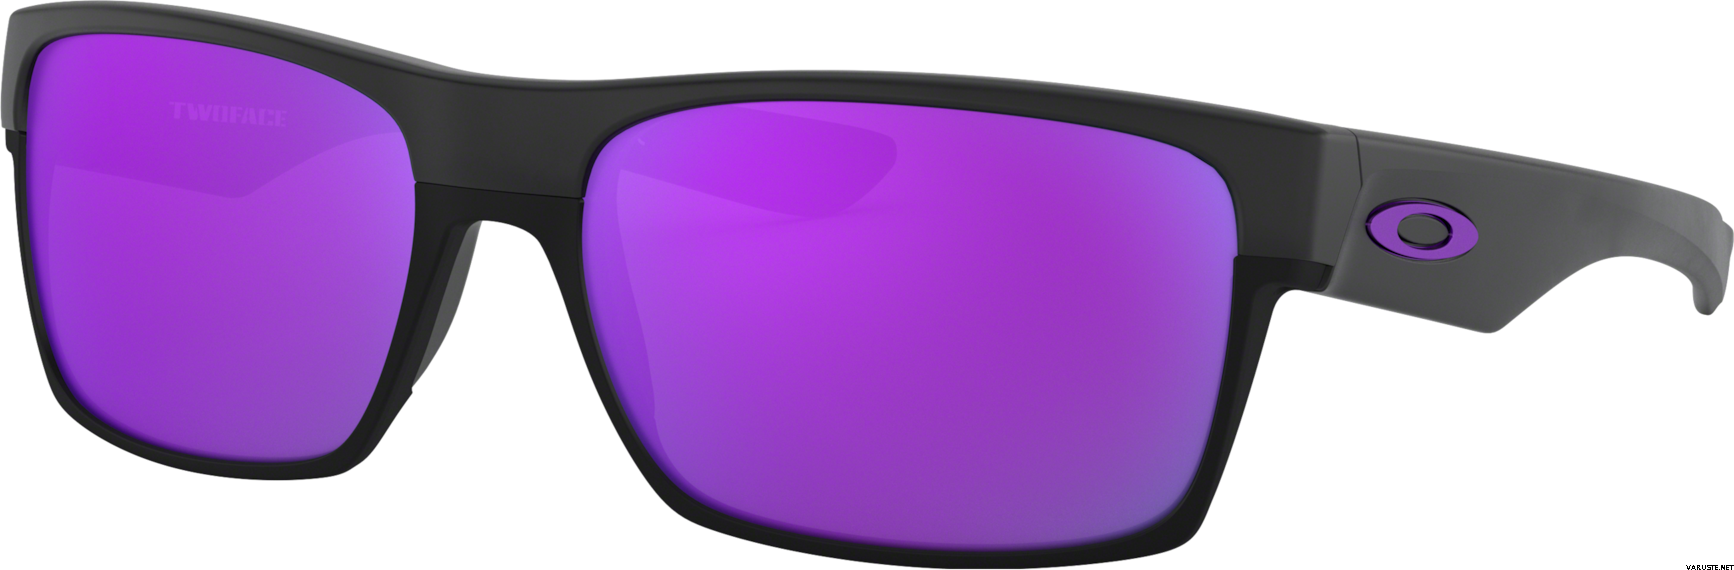 oakley twoface violet iridium